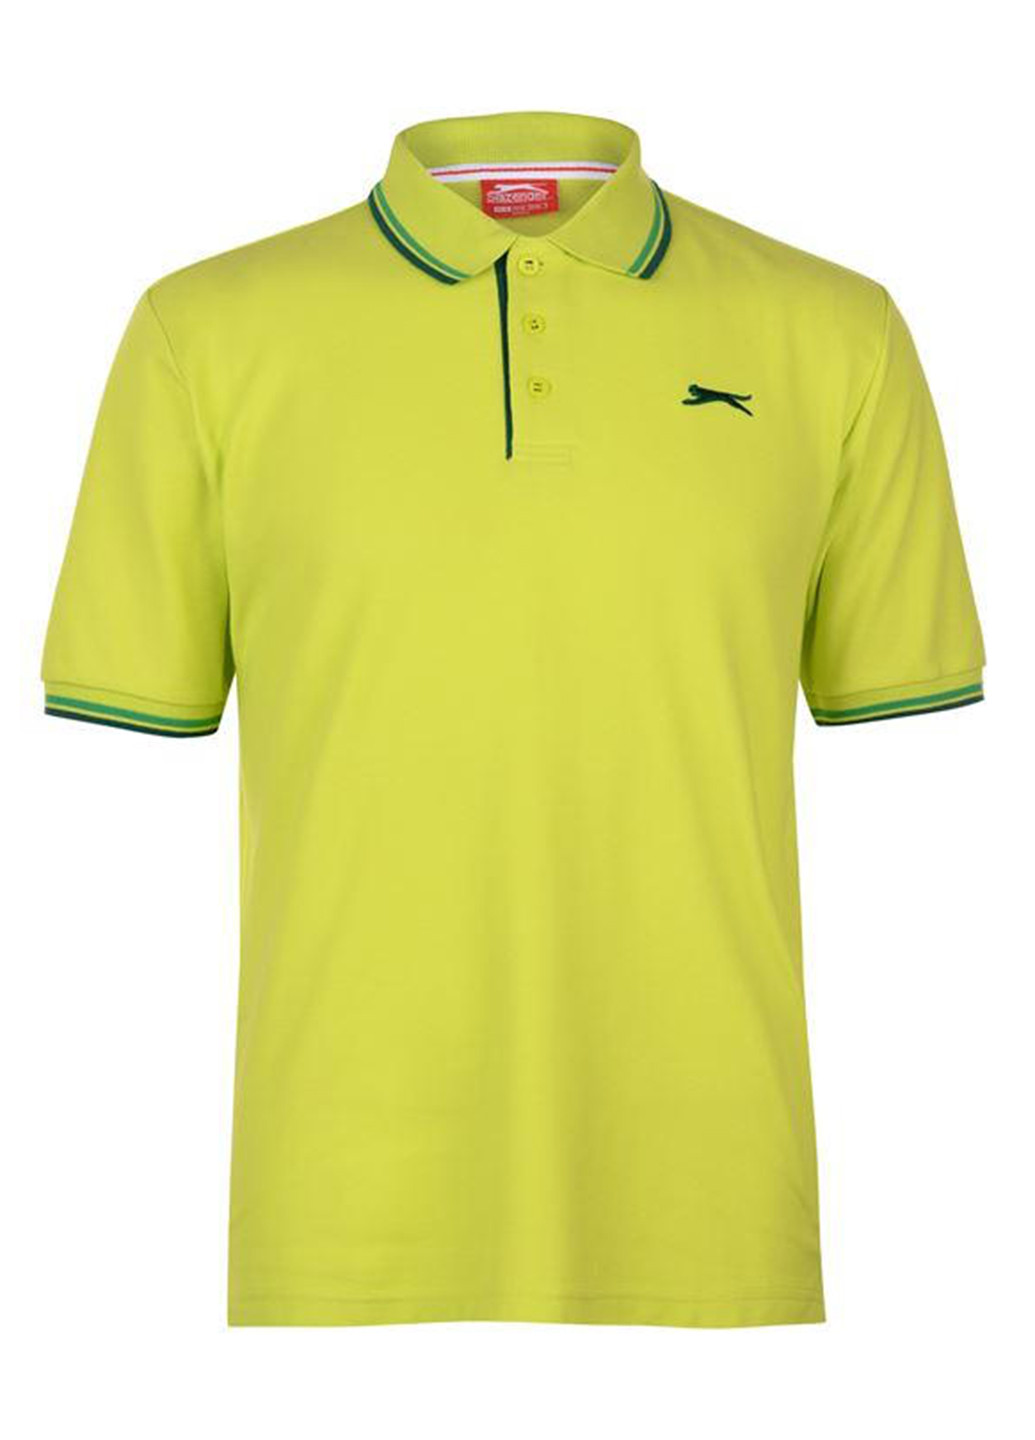 Лимонно-зеленая футболка-поло для мужчин Slazenger однотонная